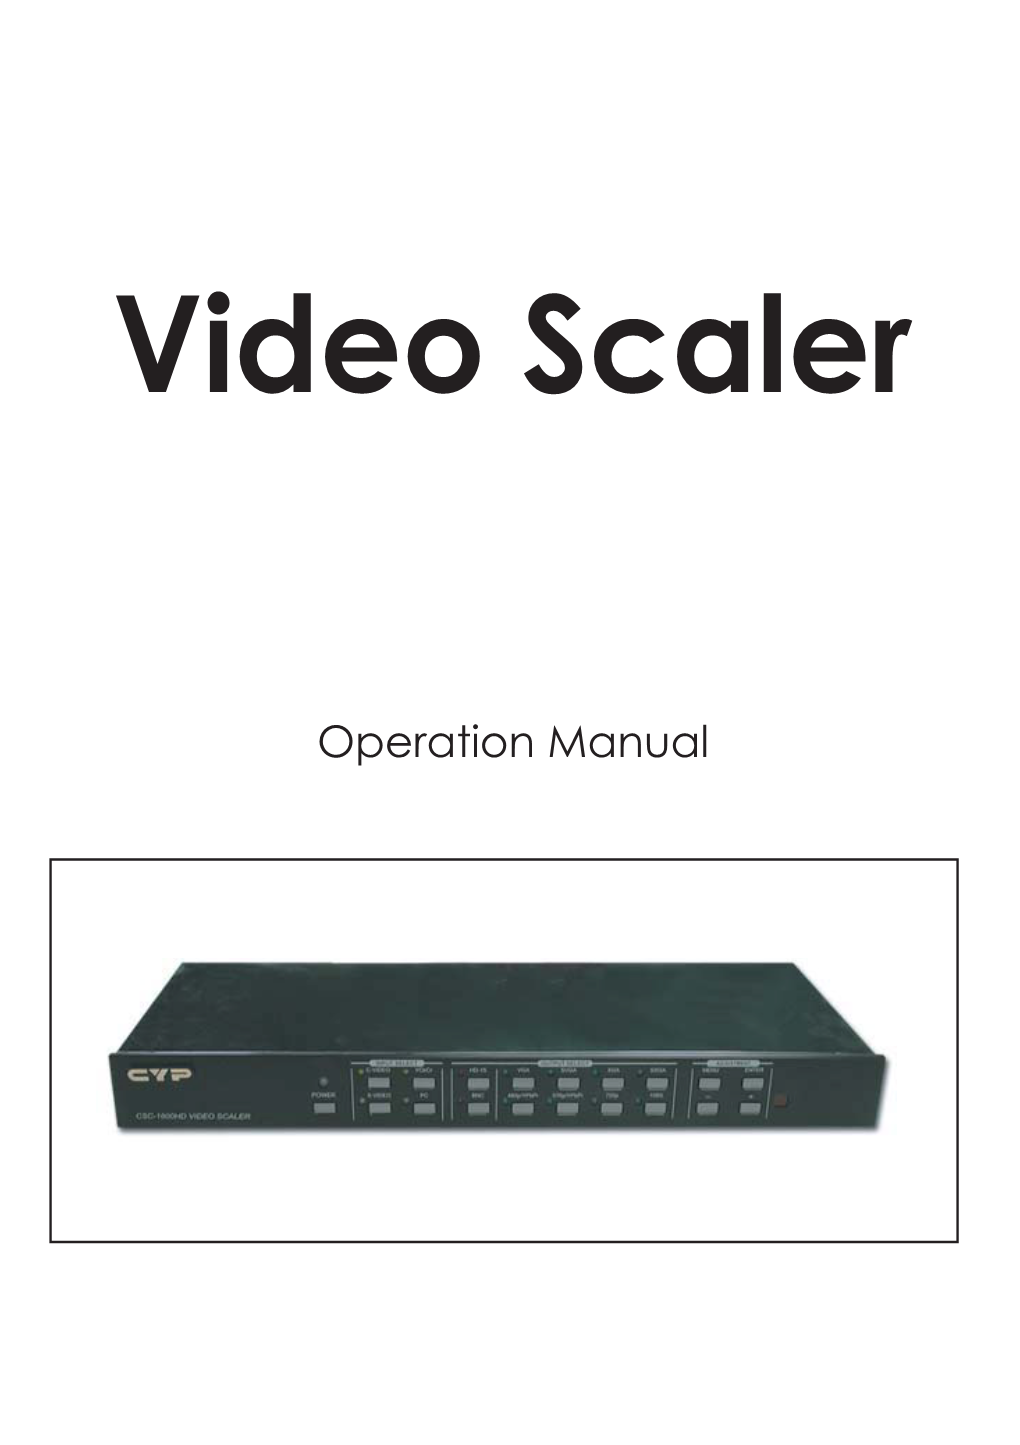 Video Scaler